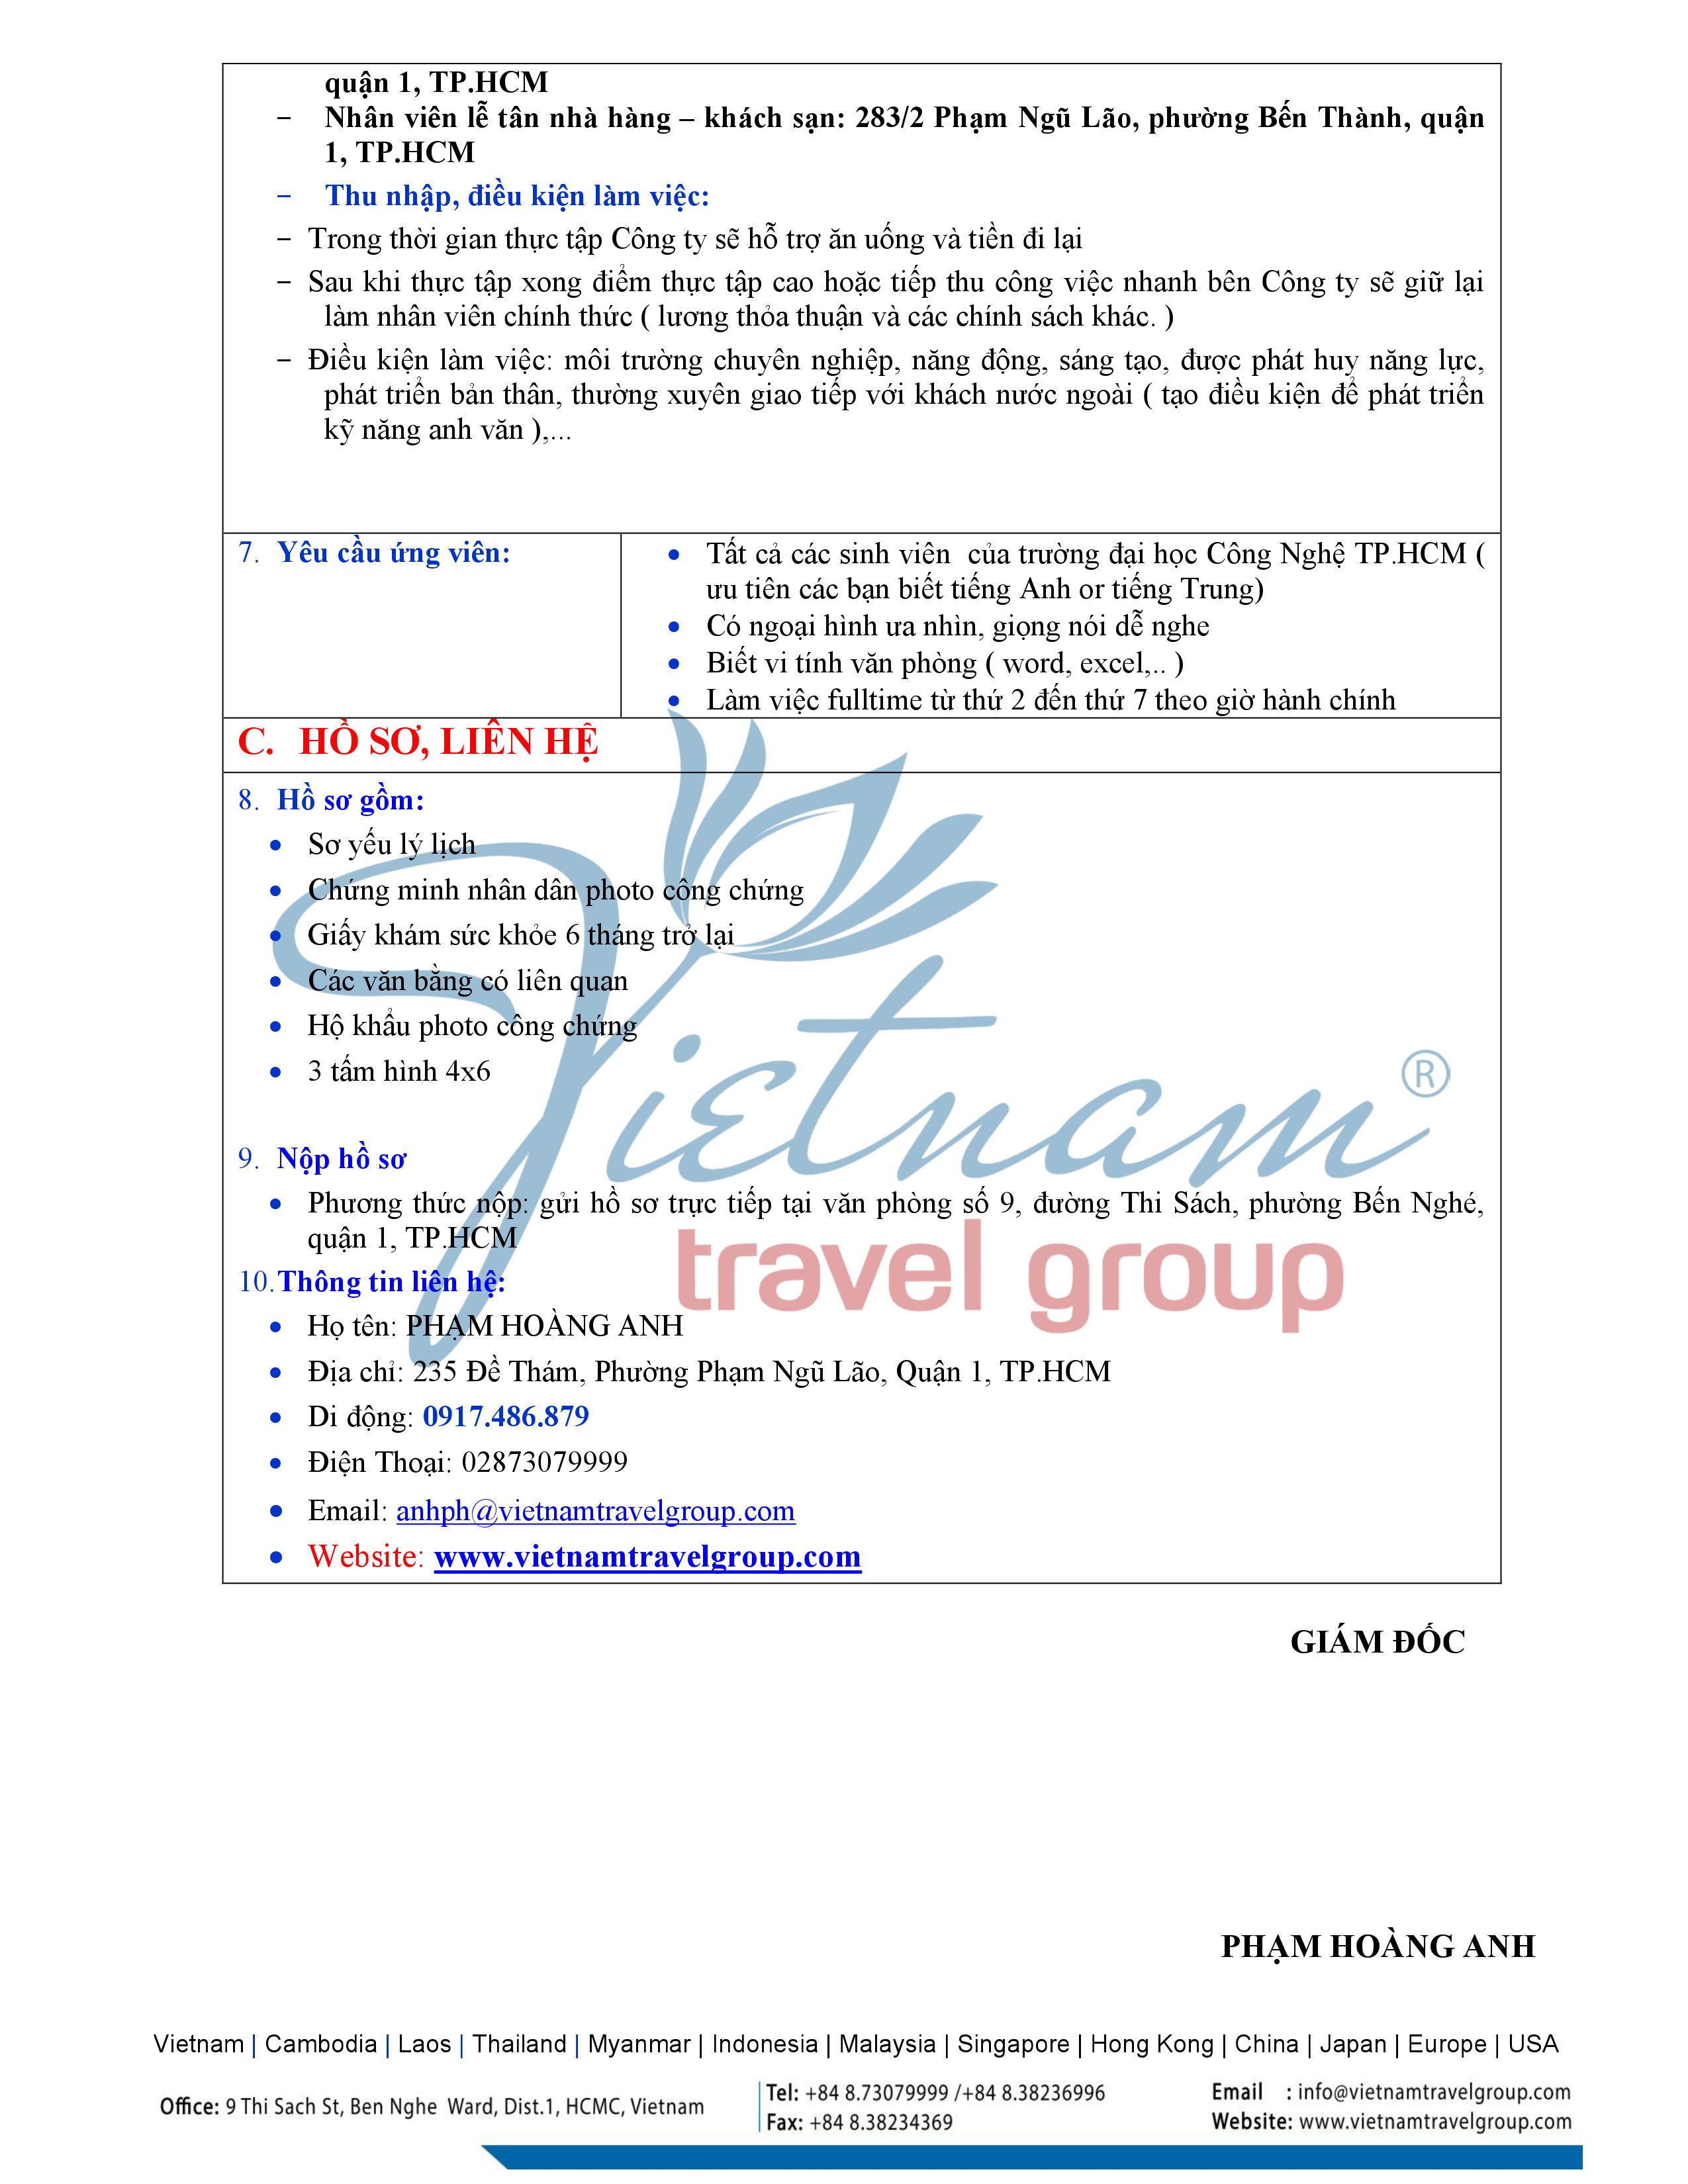 VIETNAM TRAVEL GROUP TUYỂN DỤNG 4